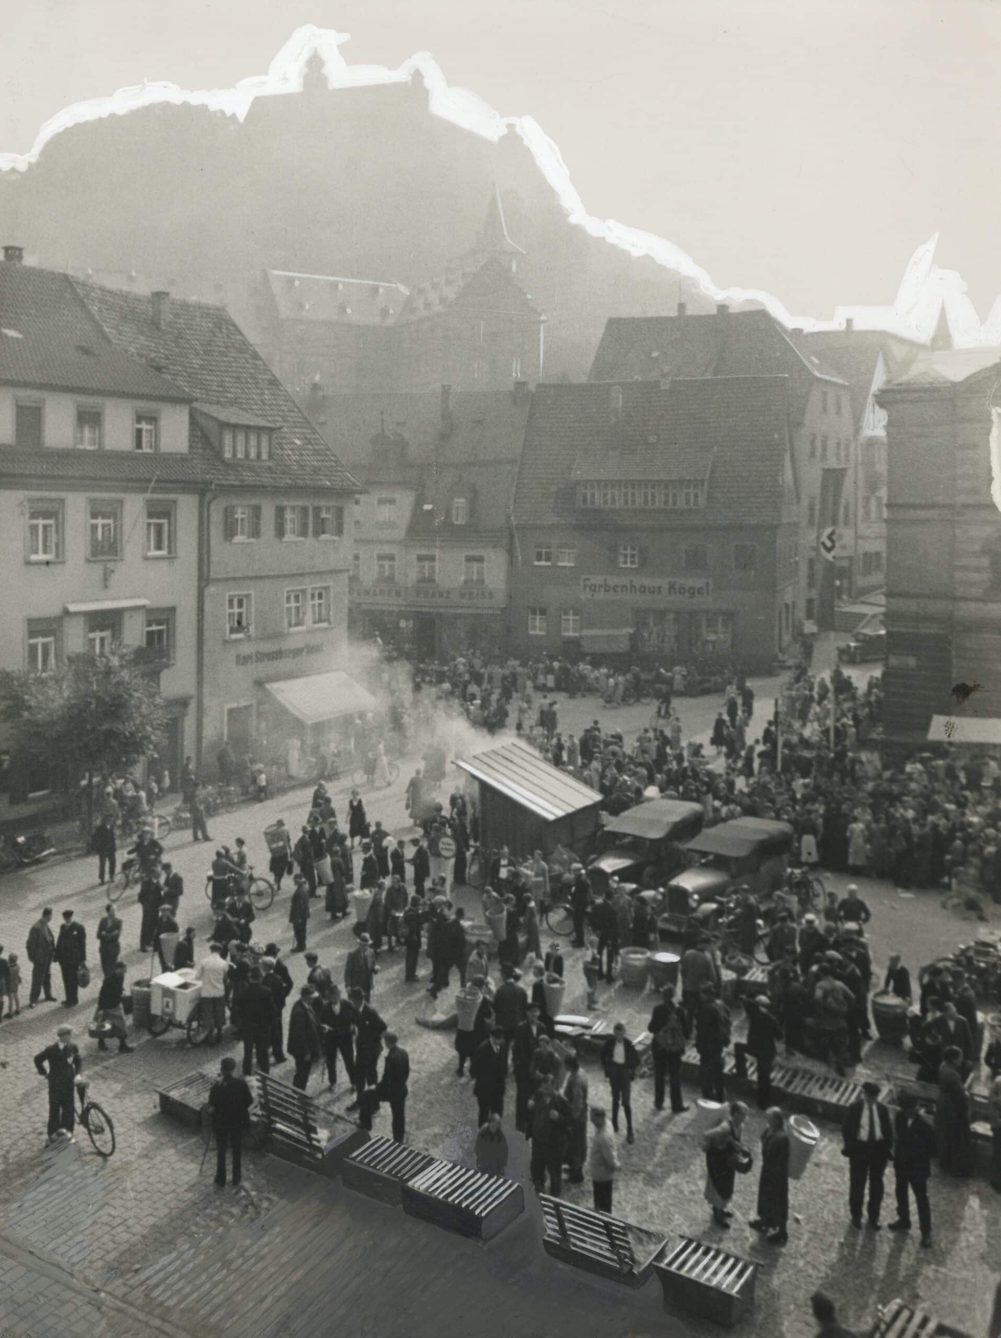 1937 Samstagsmarkt Marktplatz - Paul Damm - Kulmbach (1)